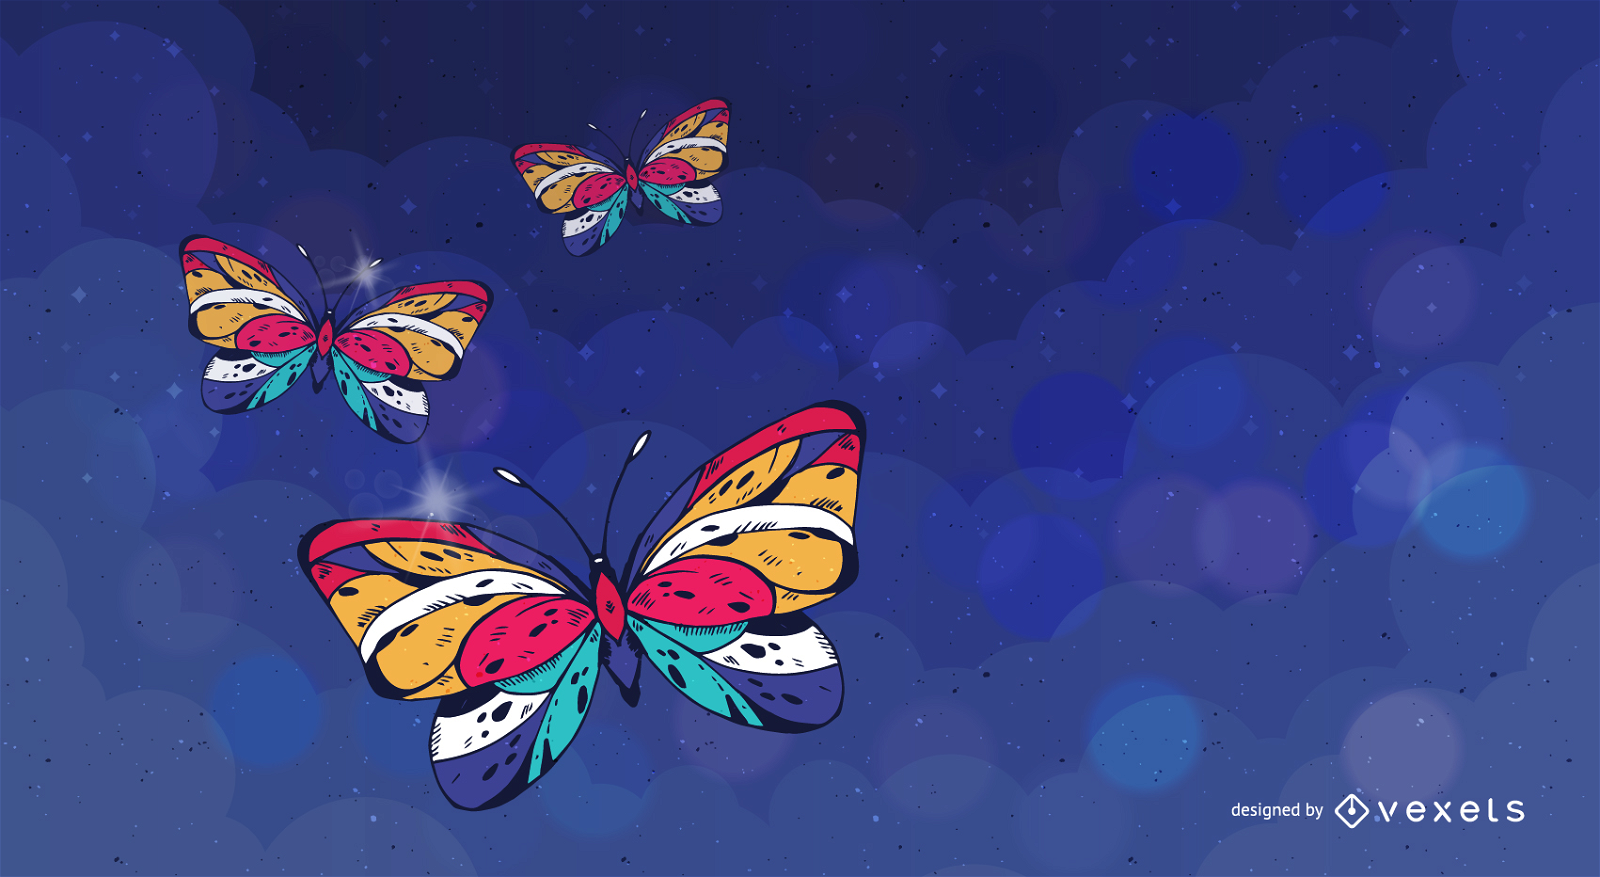 Cen?rio colorido de borboletas ilustradas